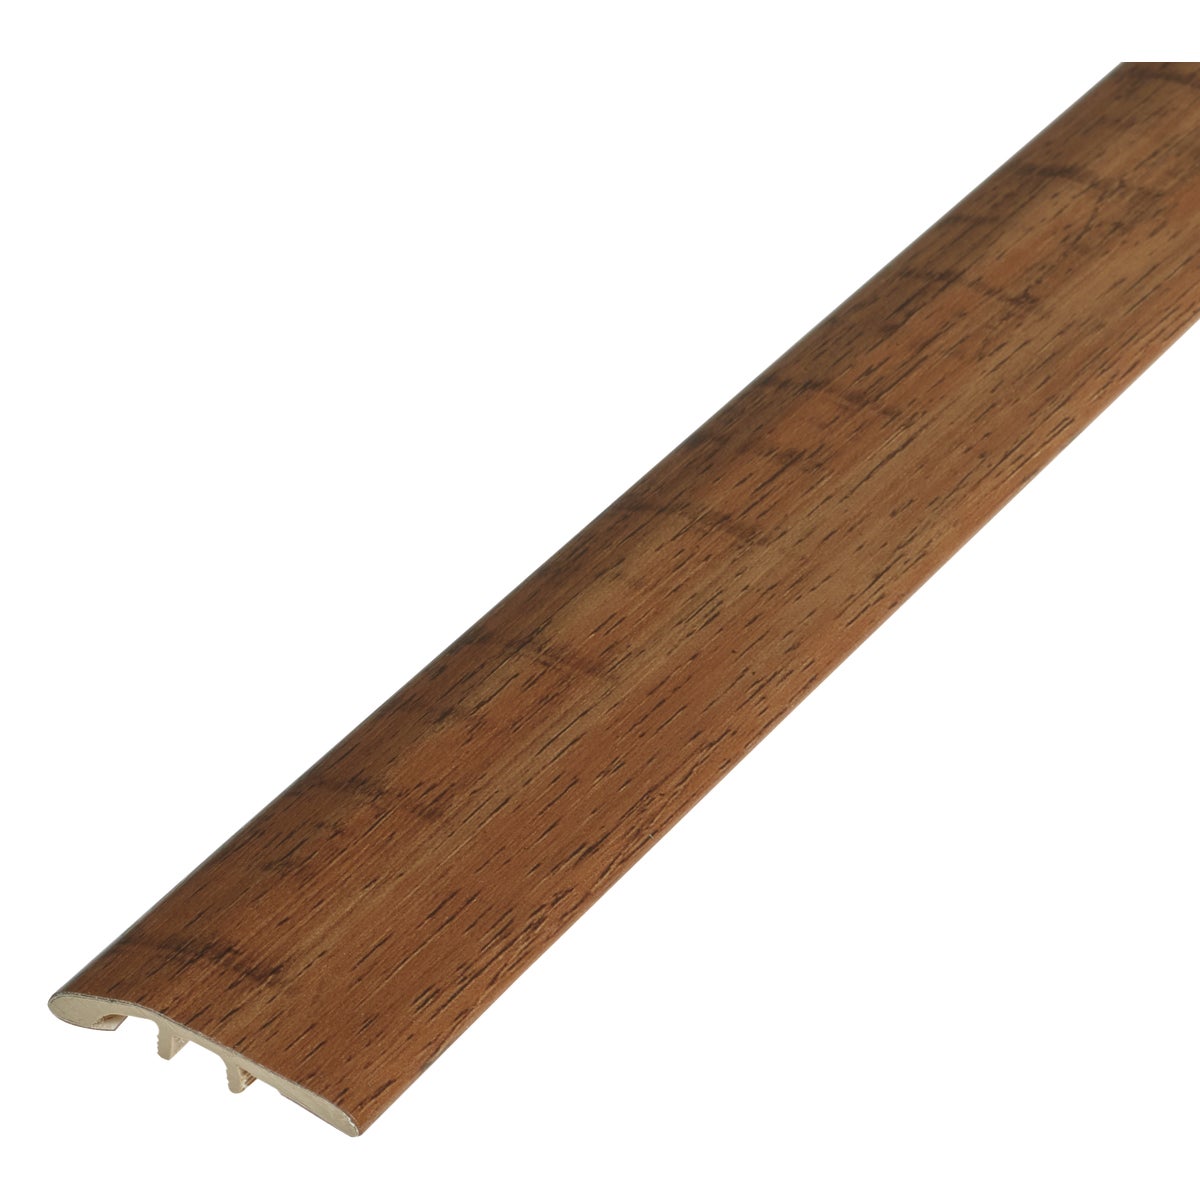 Shaw Impact Modeled Oak 1-3/4 In. W x 94 In. L Multipurpose Reducer Vinyl Floor Plank Trim